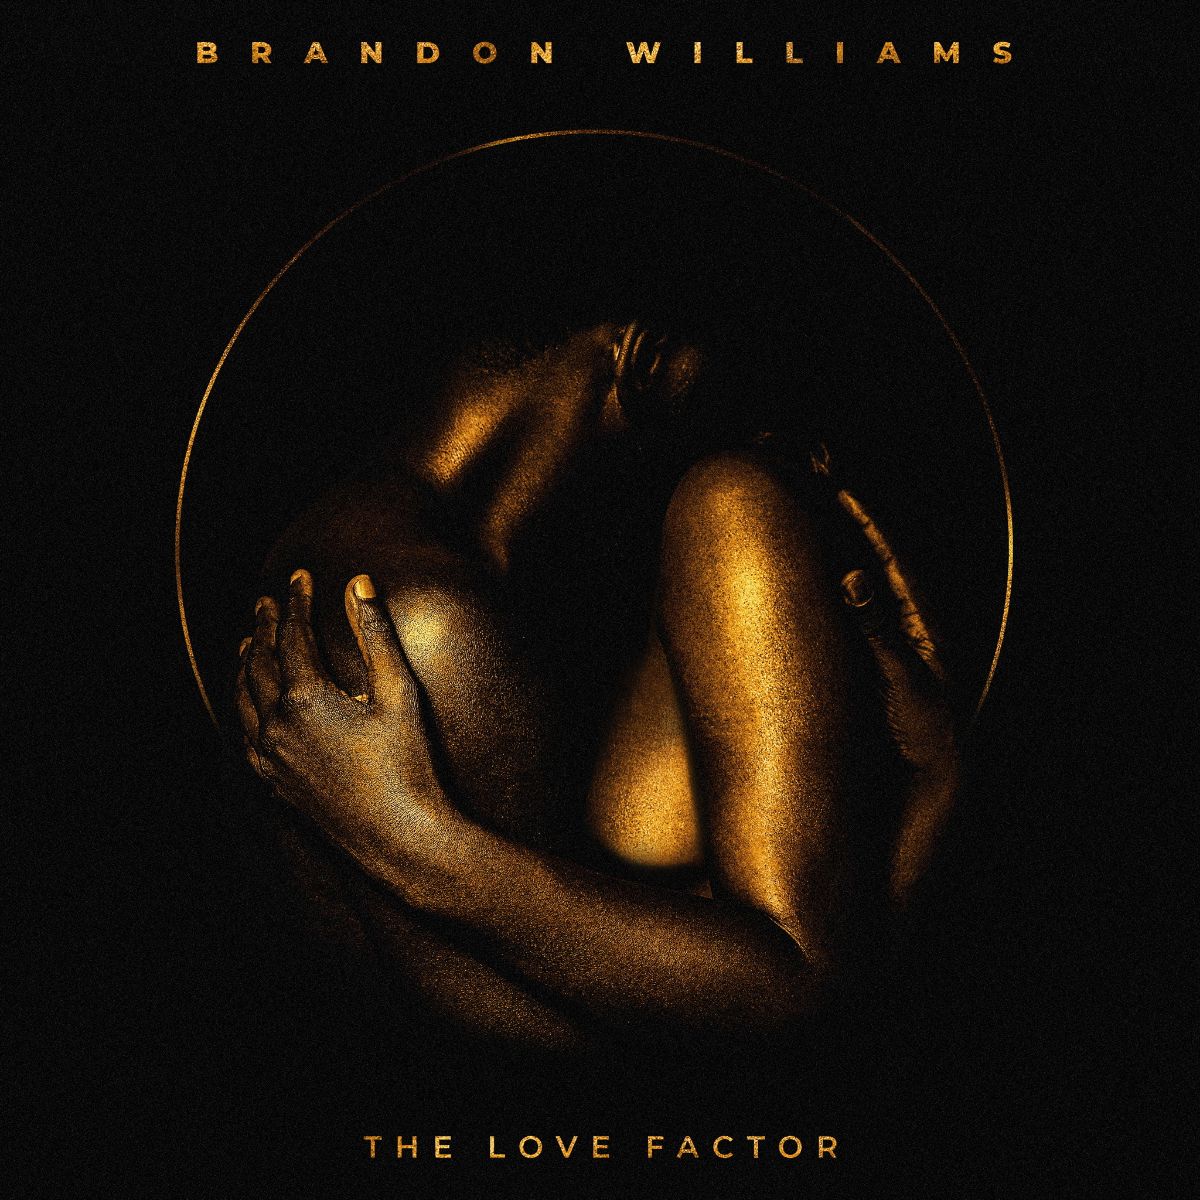 Brandon Williams Releases New Album "The Love Factor"